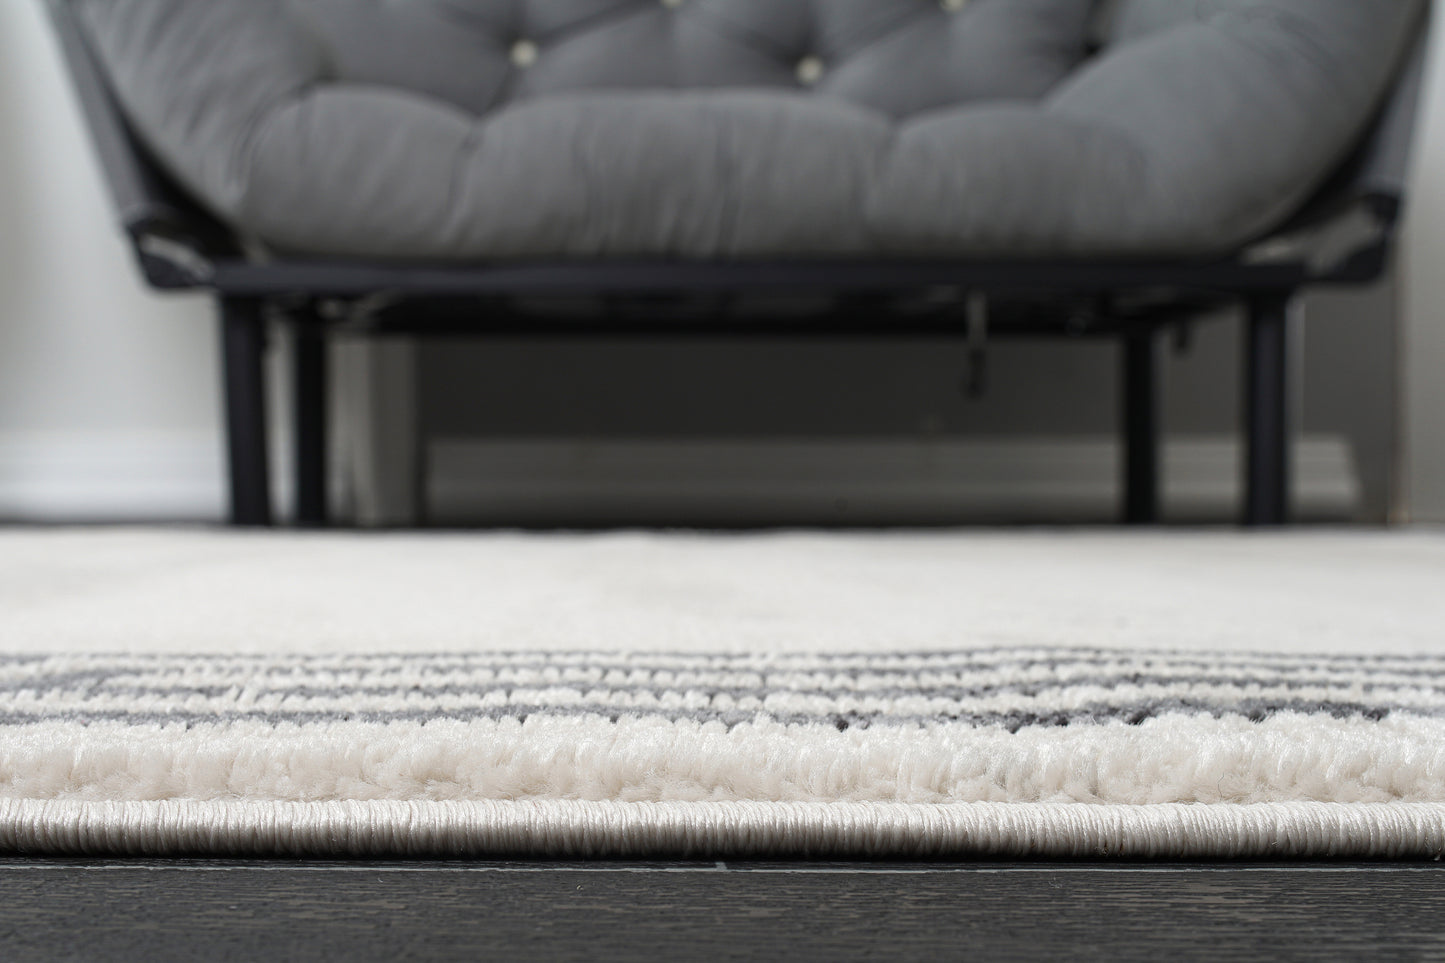 lucas dark light grey modern straps design area rug 4x6, 4x5 ft Small Carpet, Home Office, Living Room, Bedroom